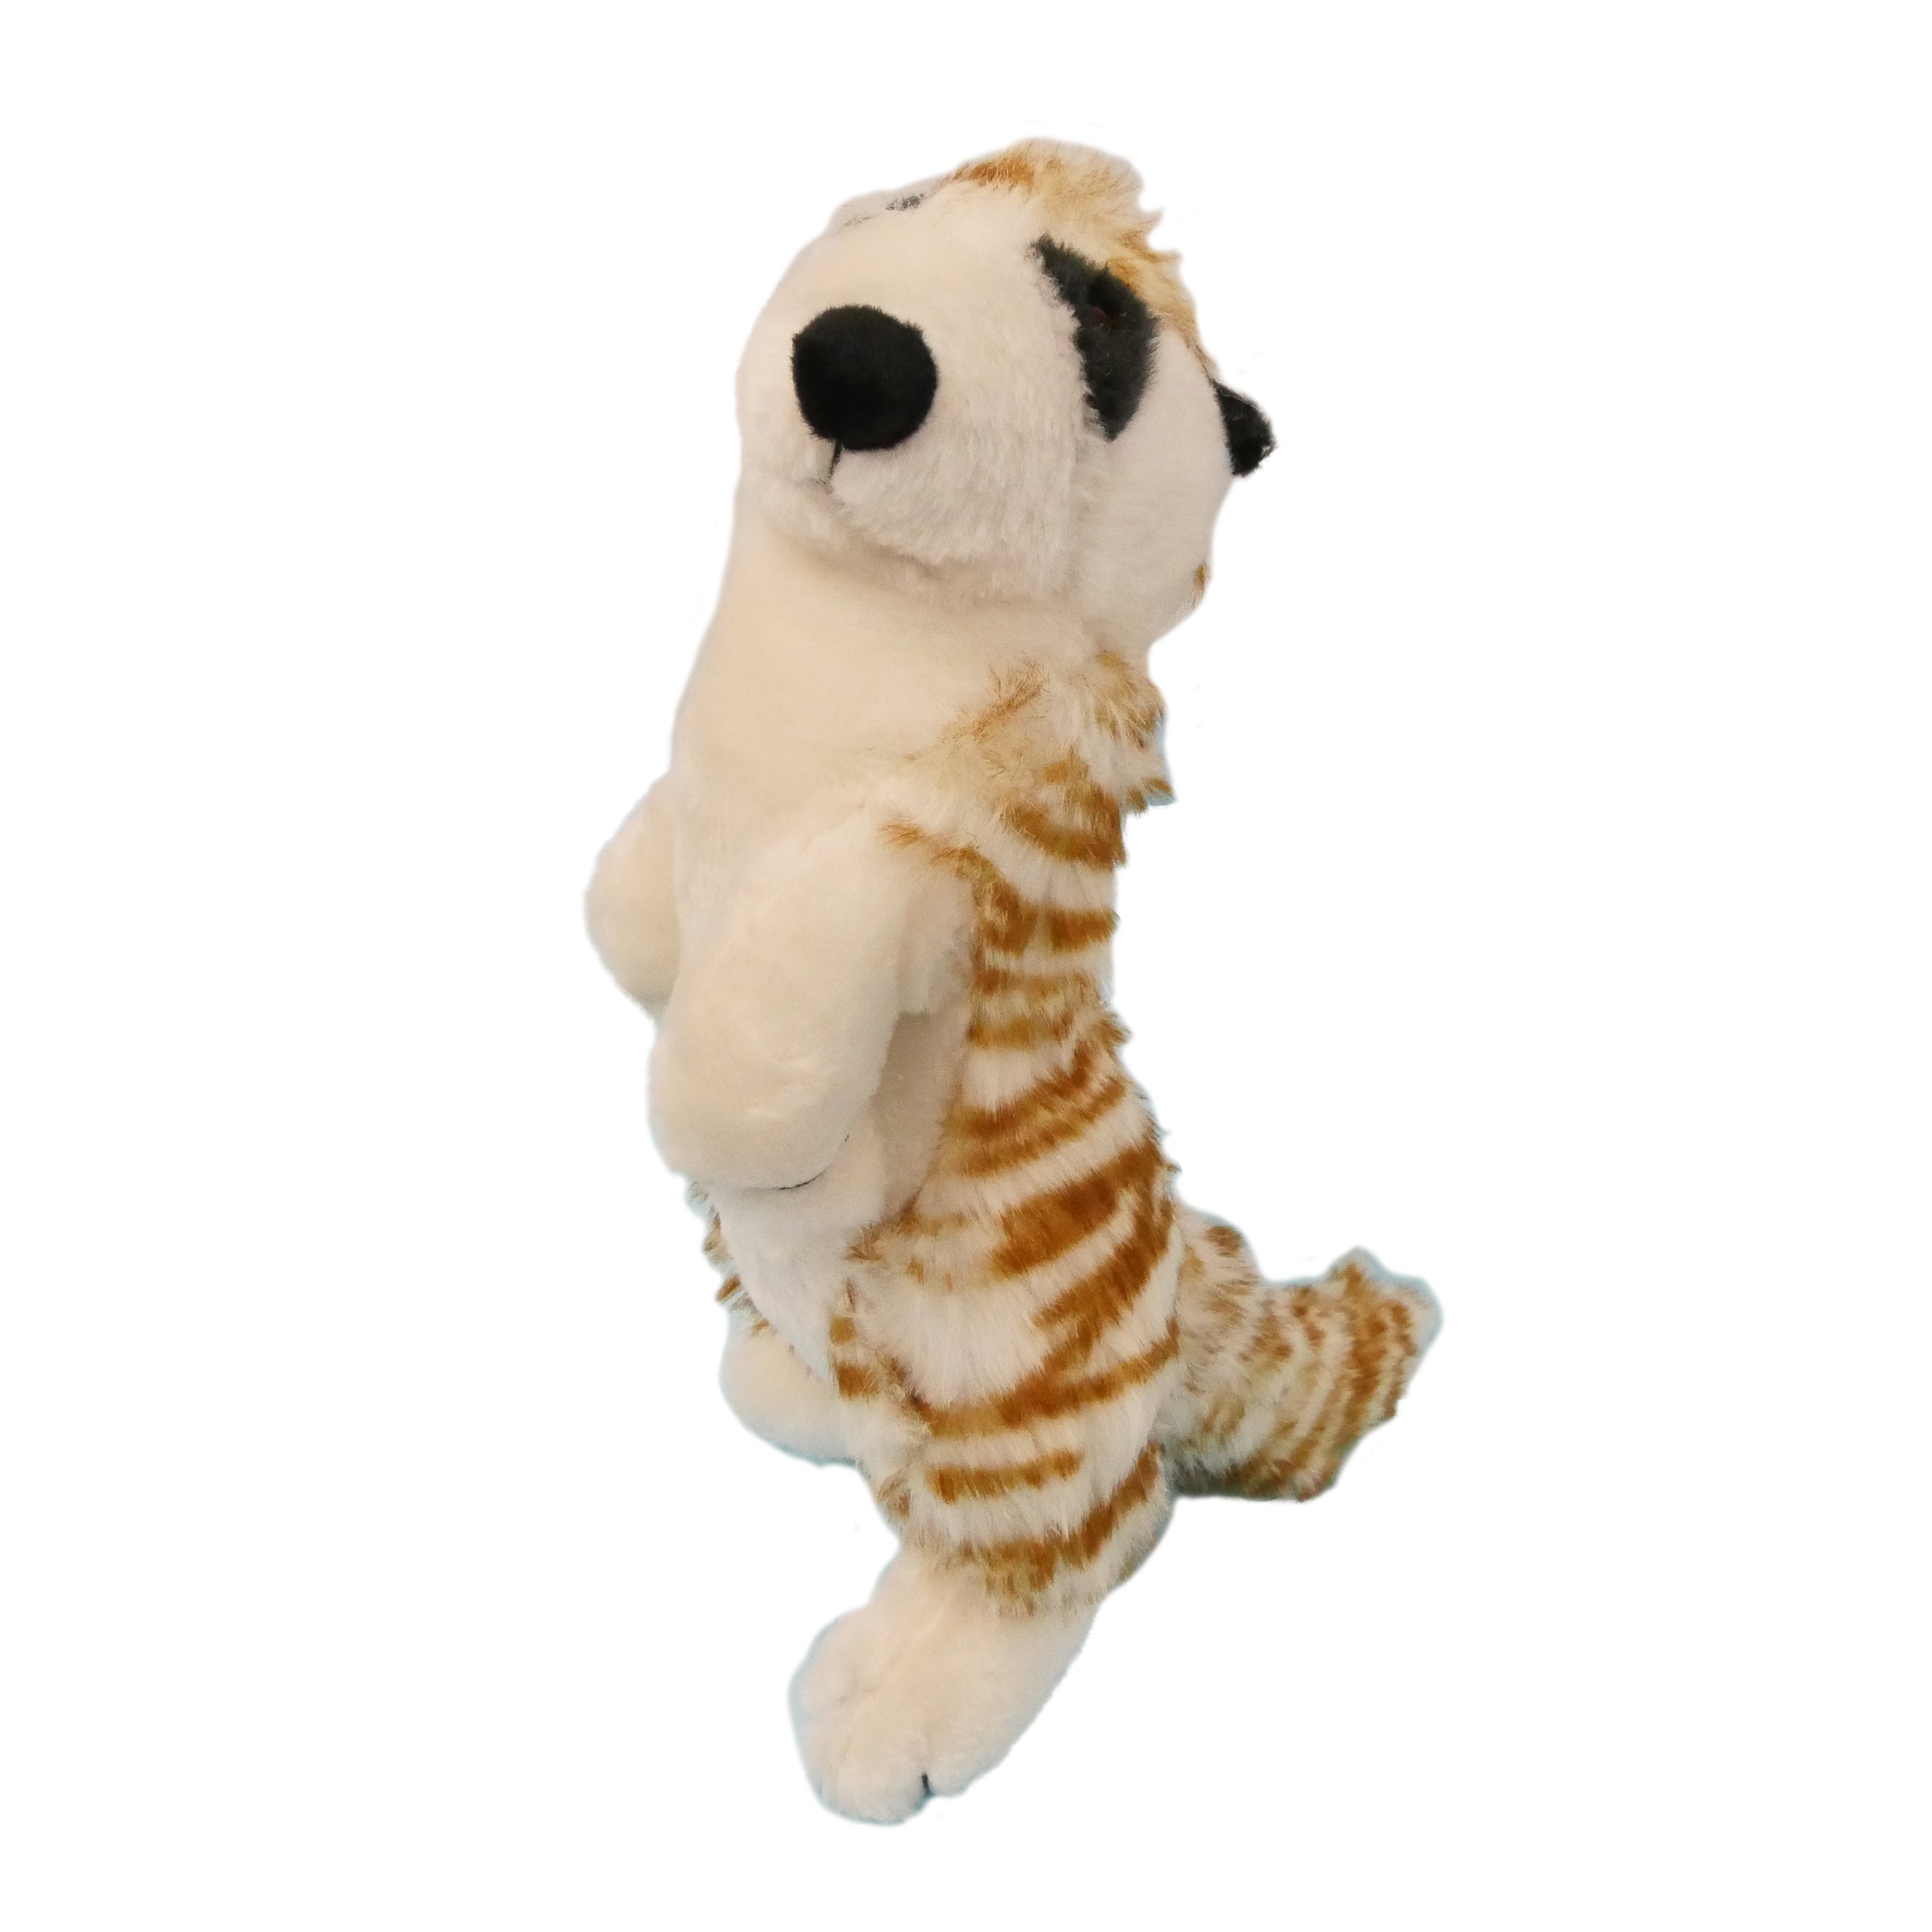 [Dog toy] Plush Standing Meerkat